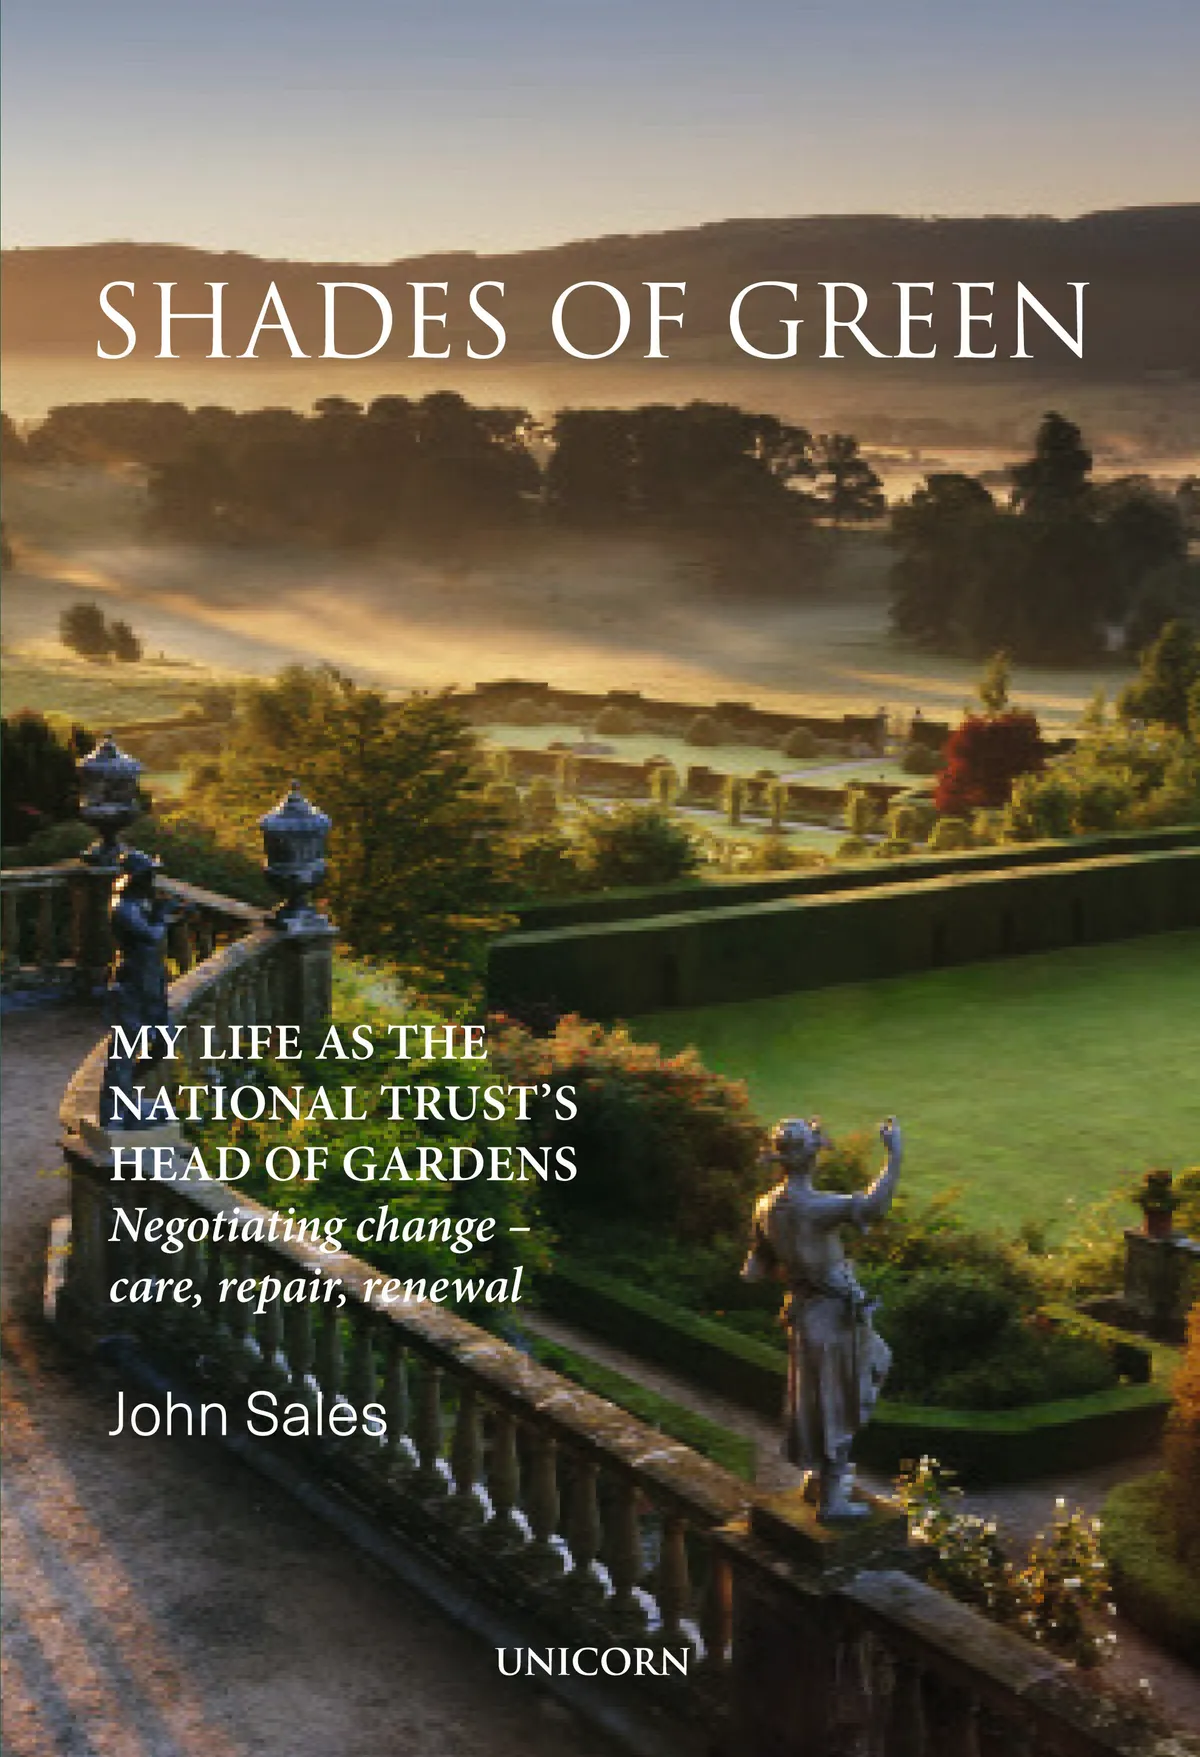 Shades of Green by Ambra Edwards